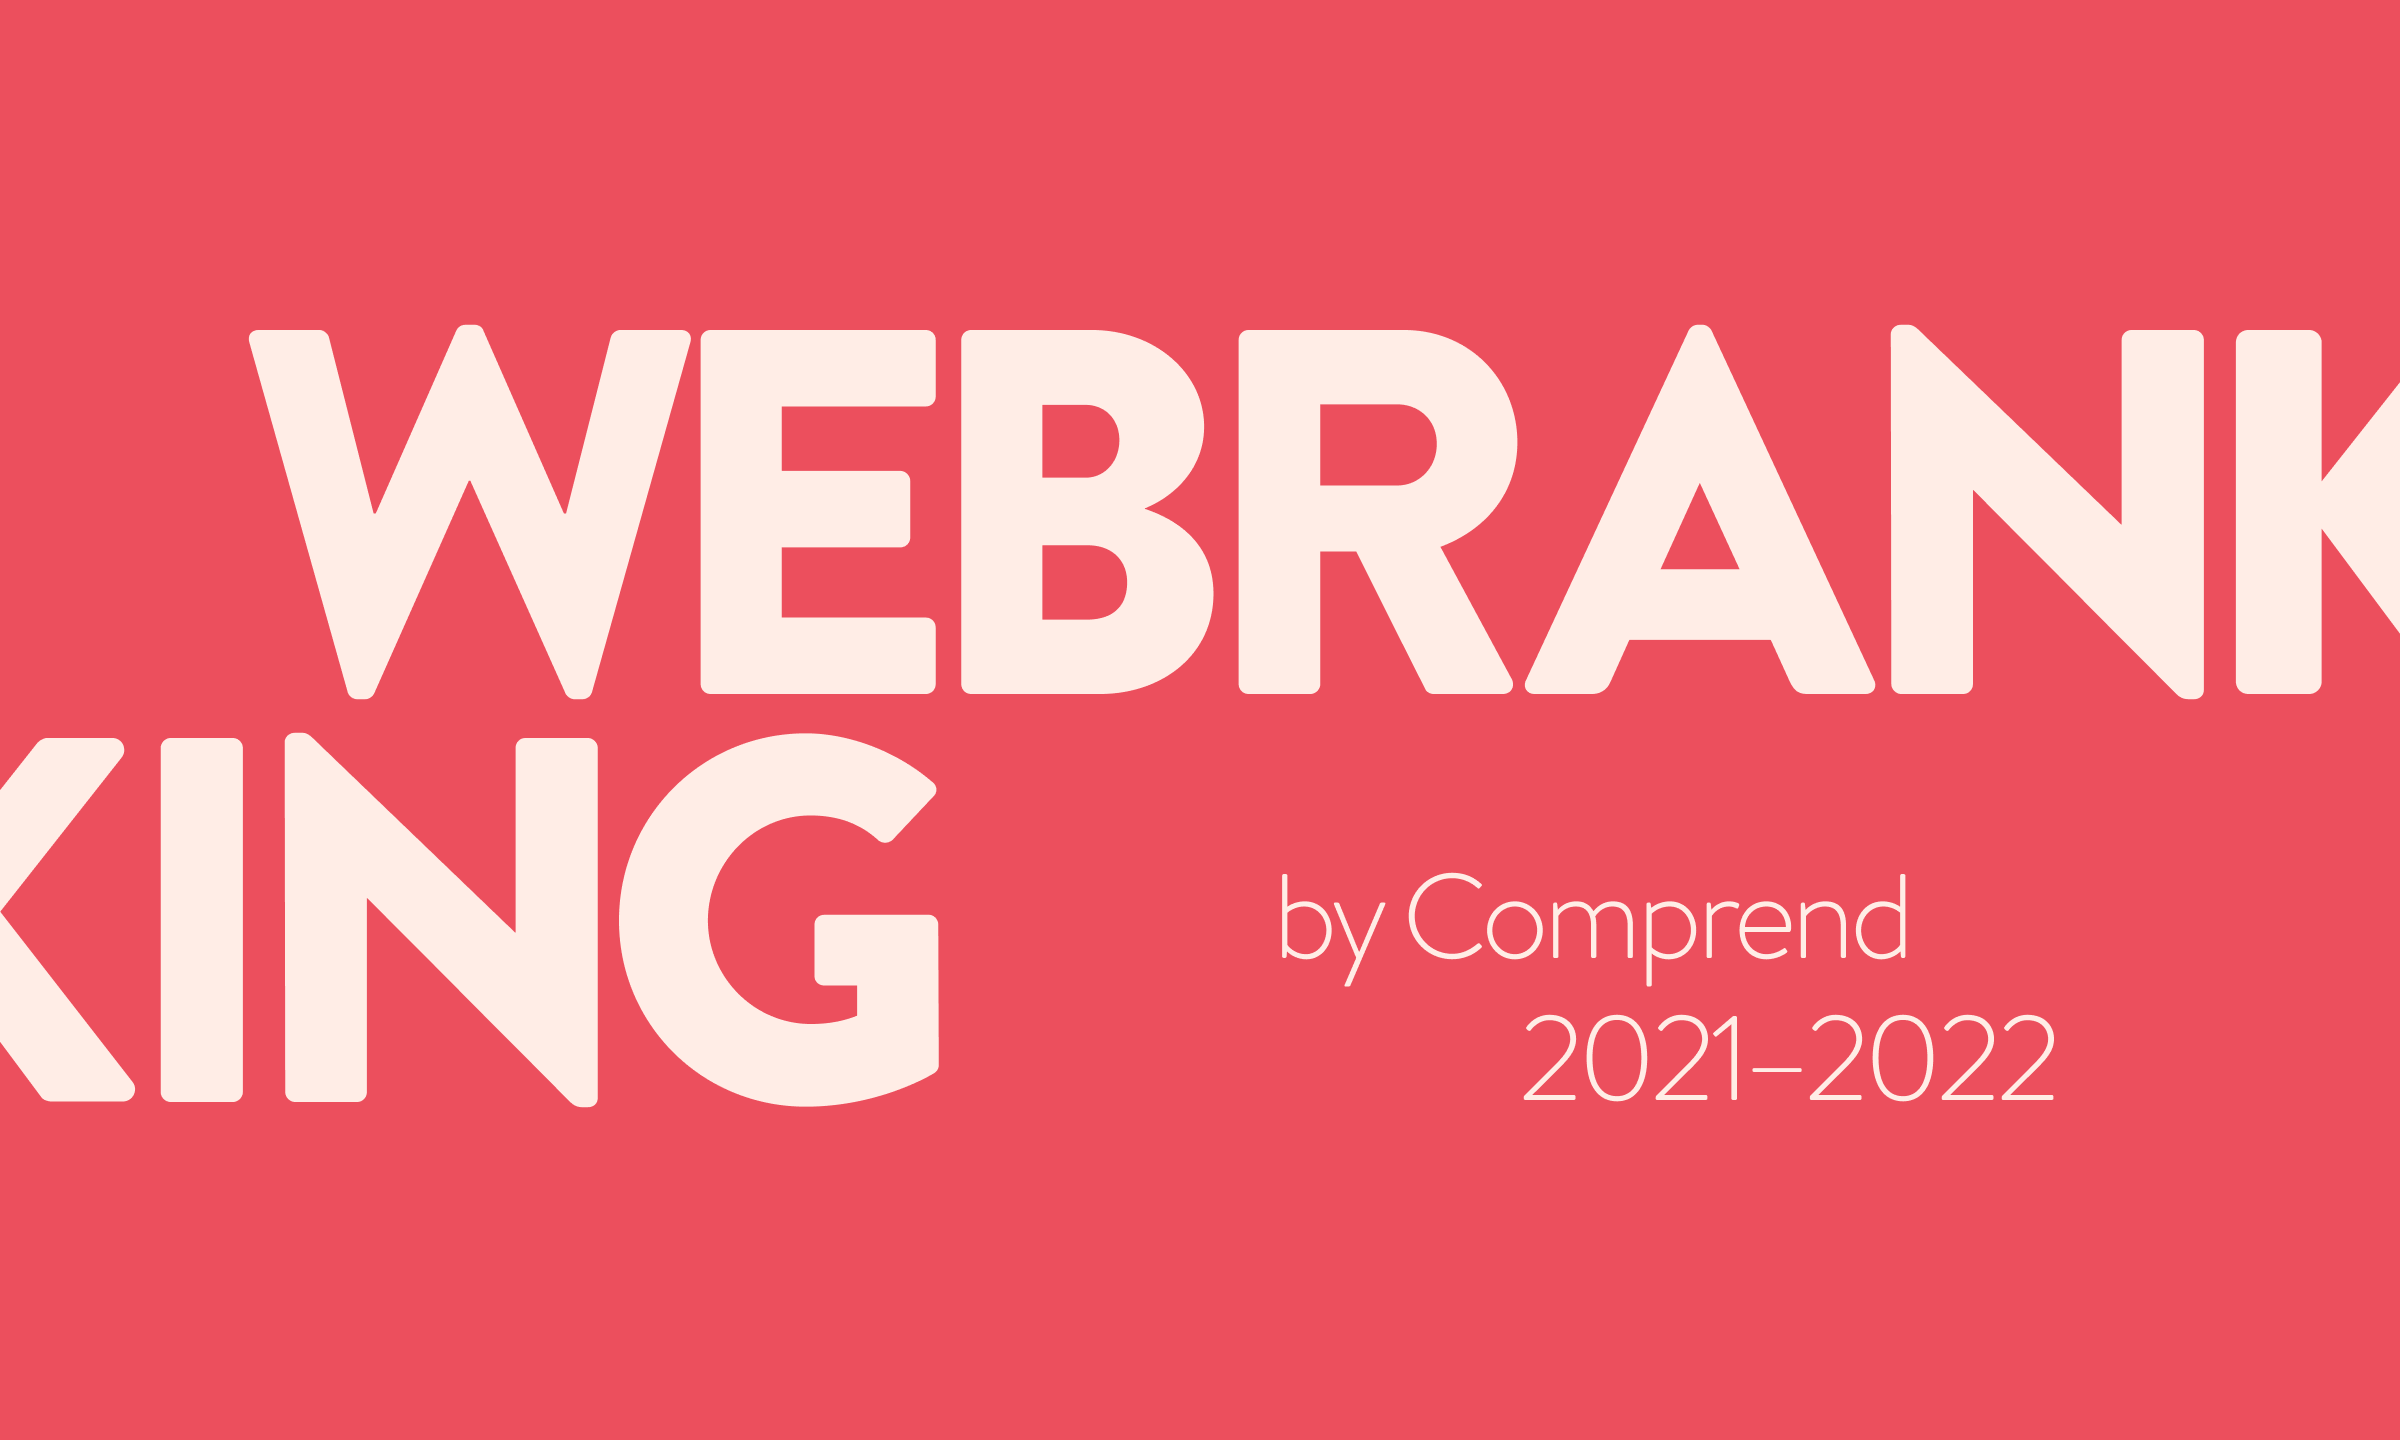 Webranking by Comprend 2021-2022